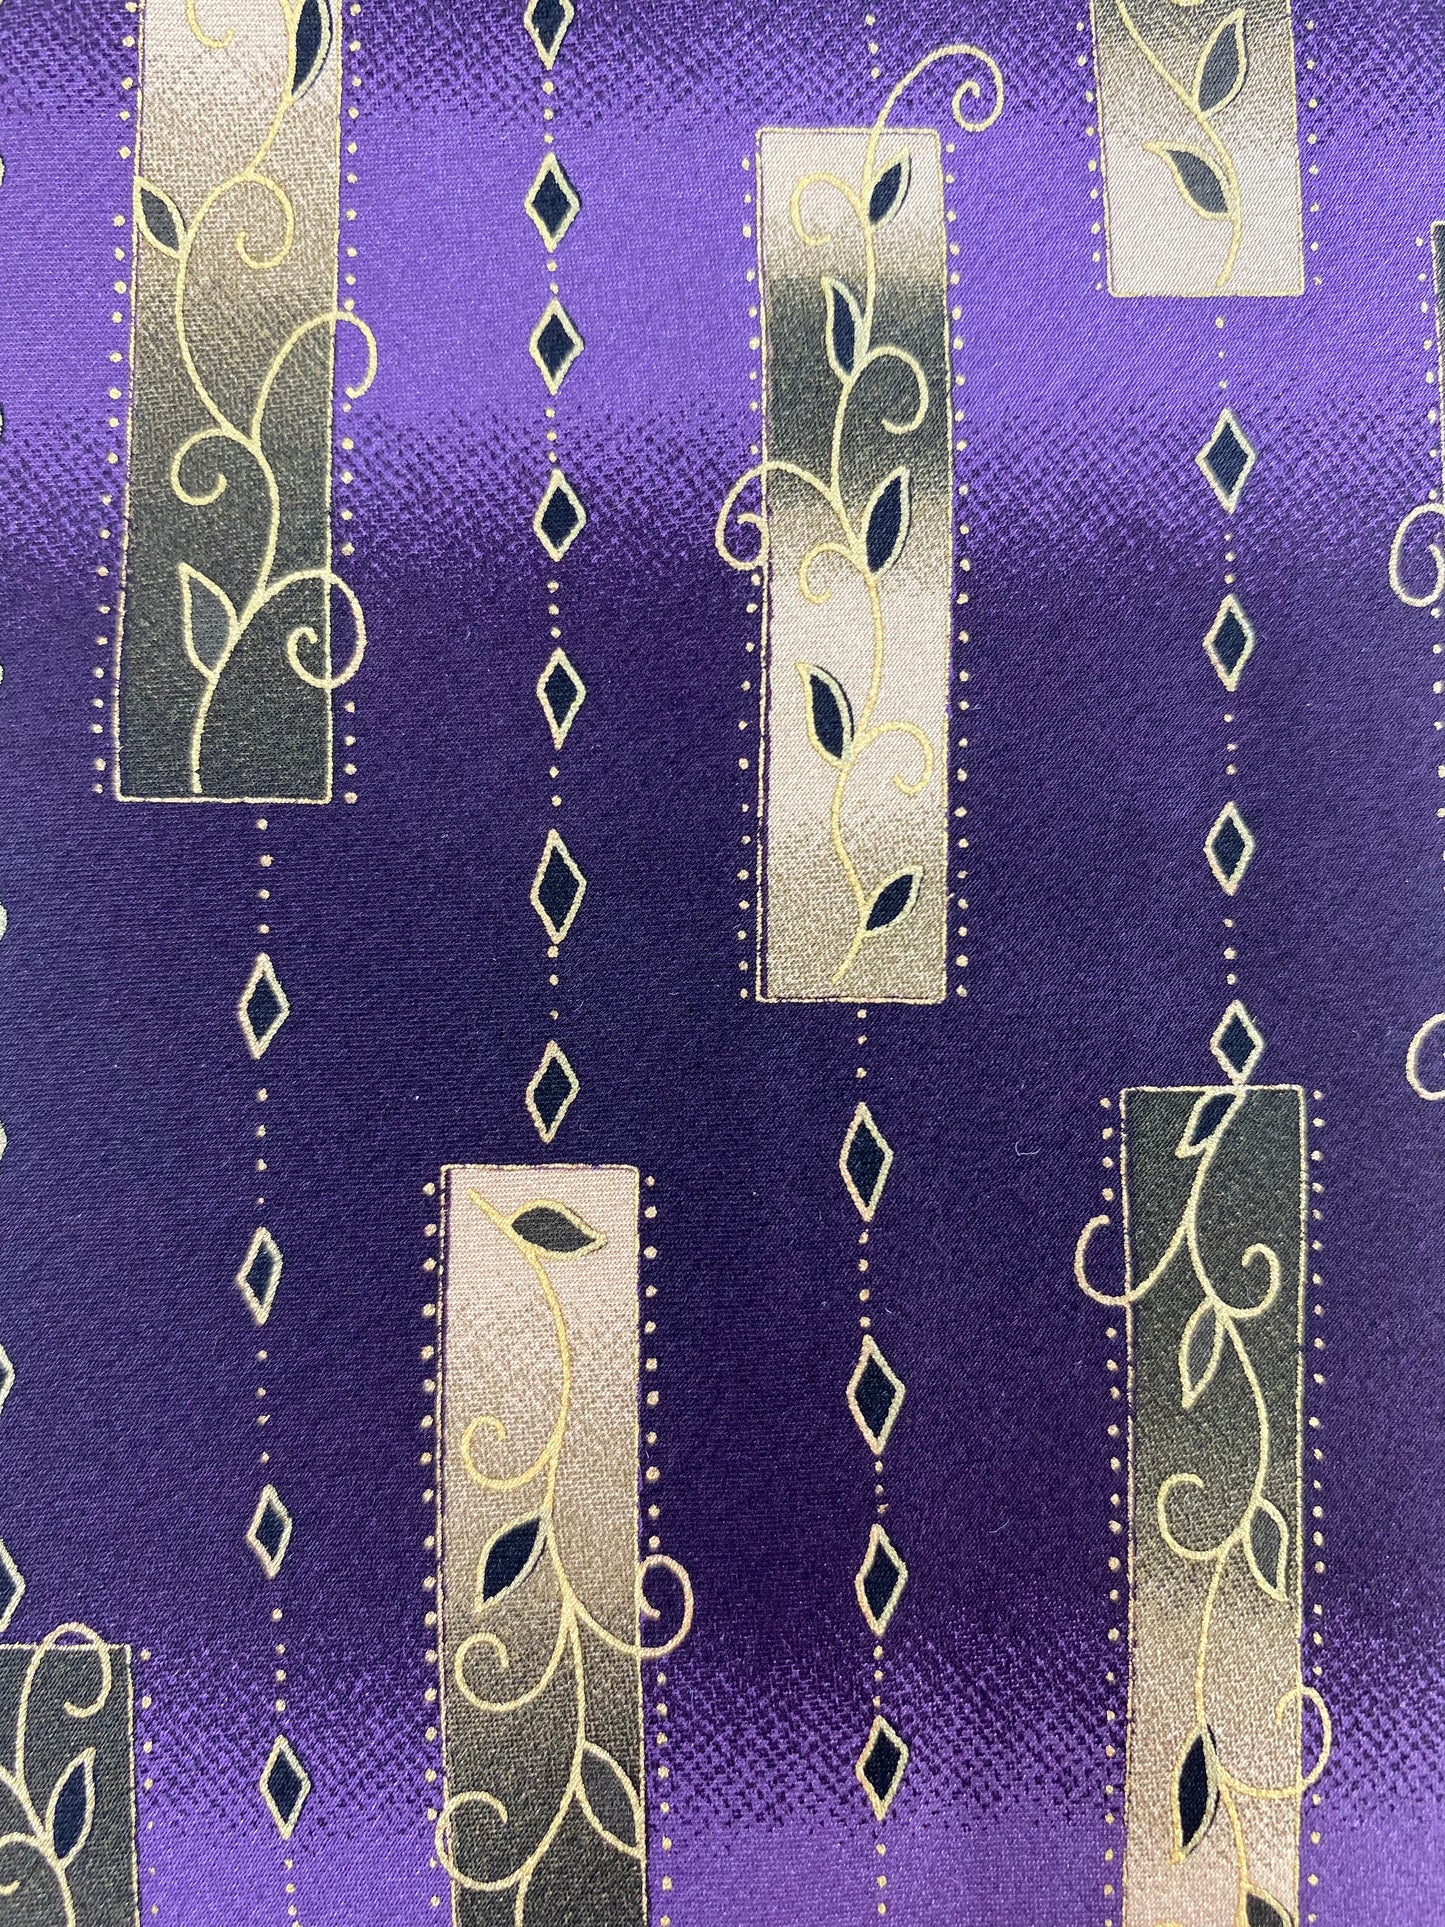 90s Deadstock Silk Necktie, Men's Vintage Purple/ Gold Filigree Pattern Tie, NOS